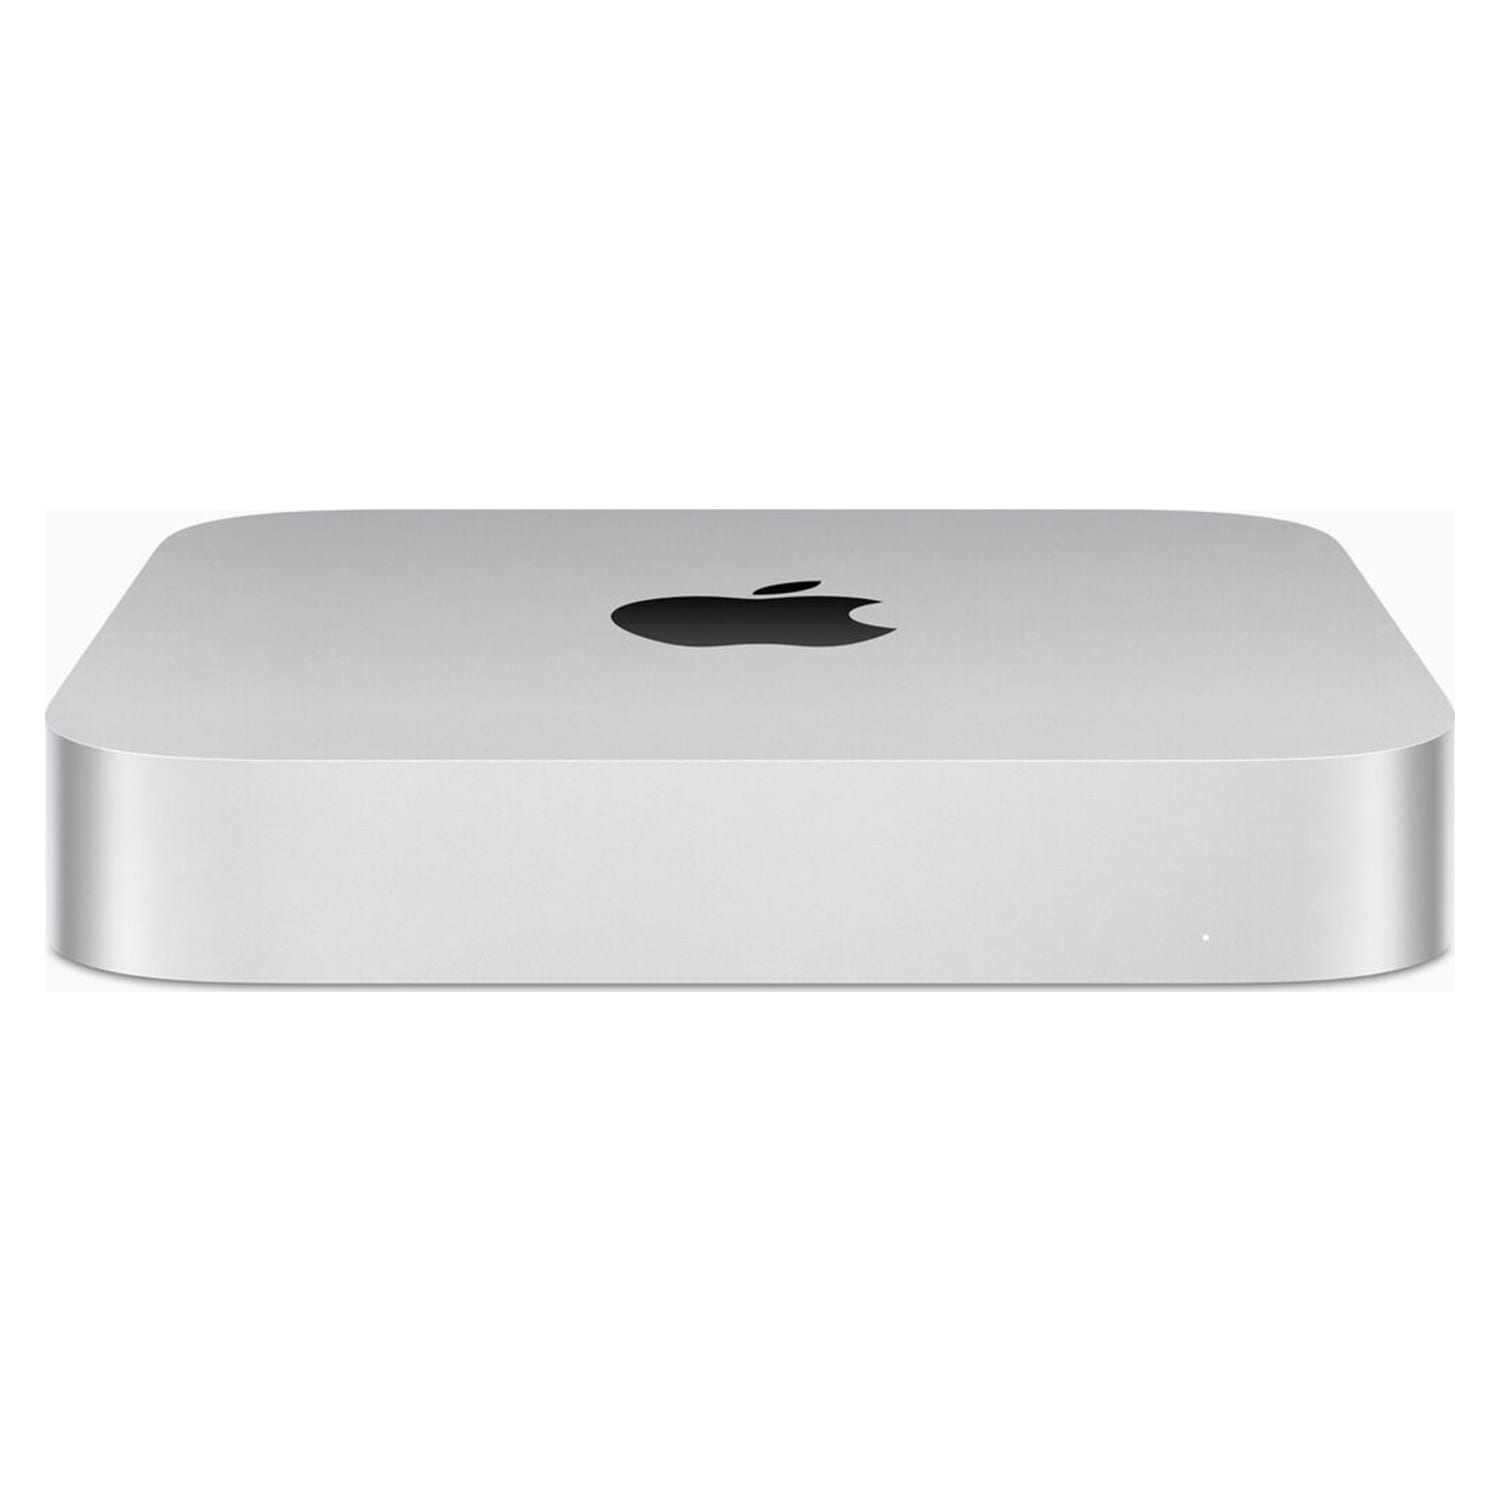 Apple - Mac mini Desktop - M2 Chip - 8GB Memory - 256GB SSD (Latest Model) - Silver